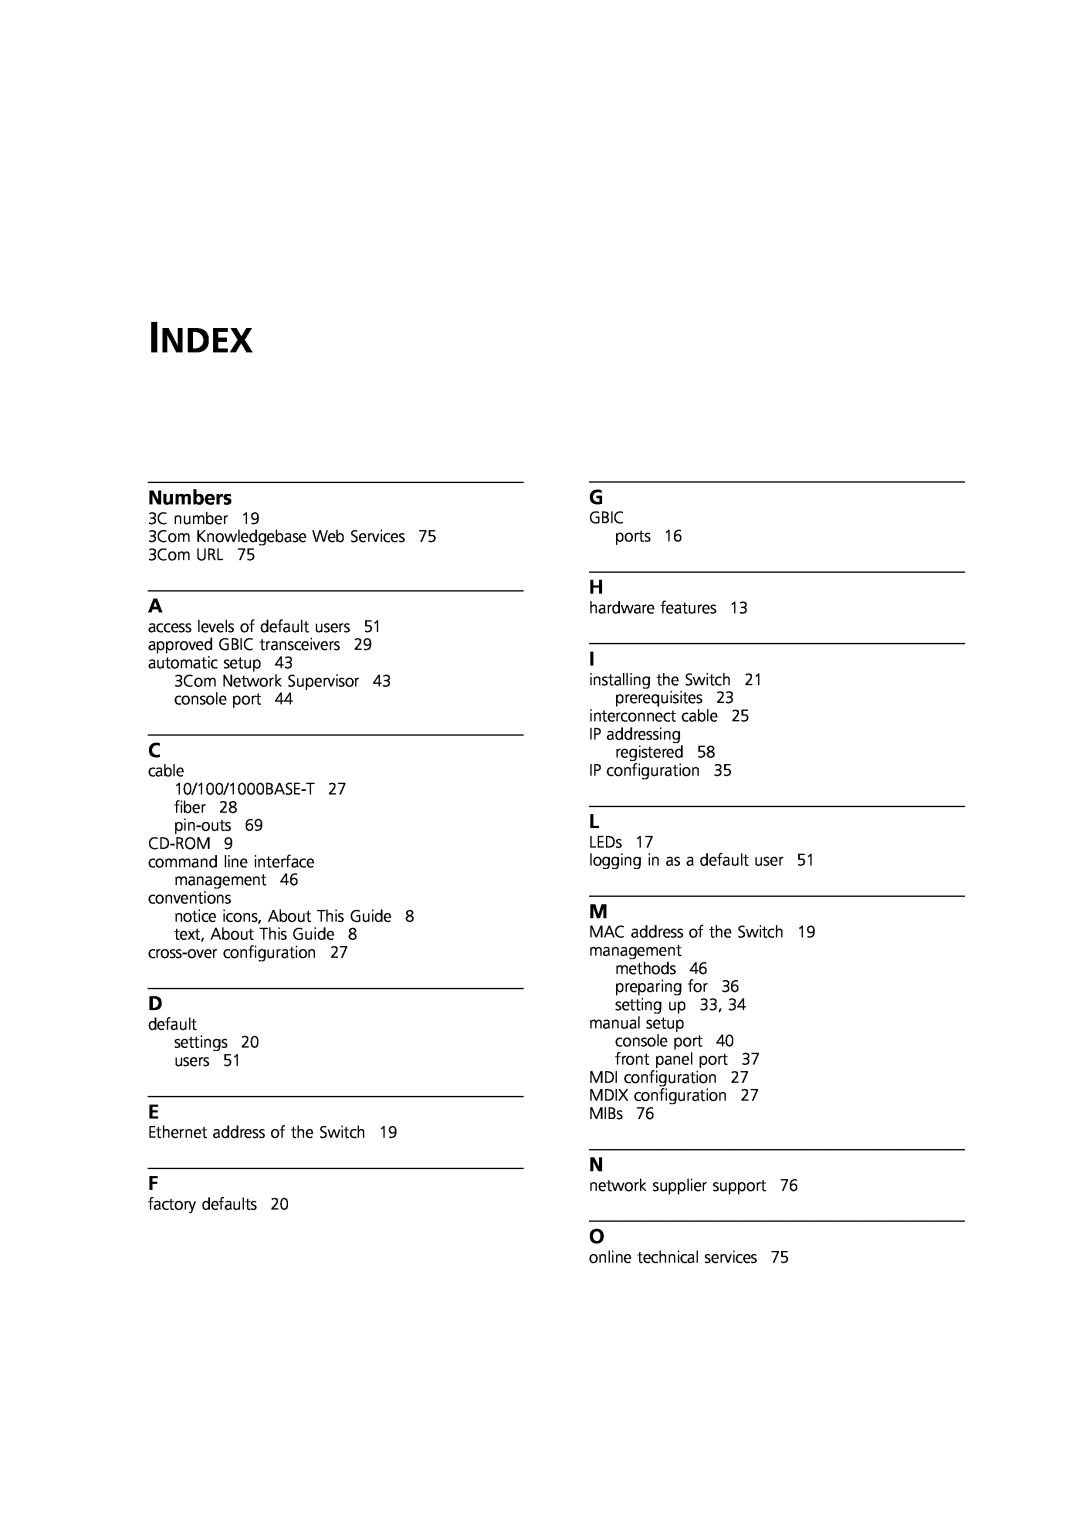 3Com DUA1770-0AAA04 manual Index, Numbers 